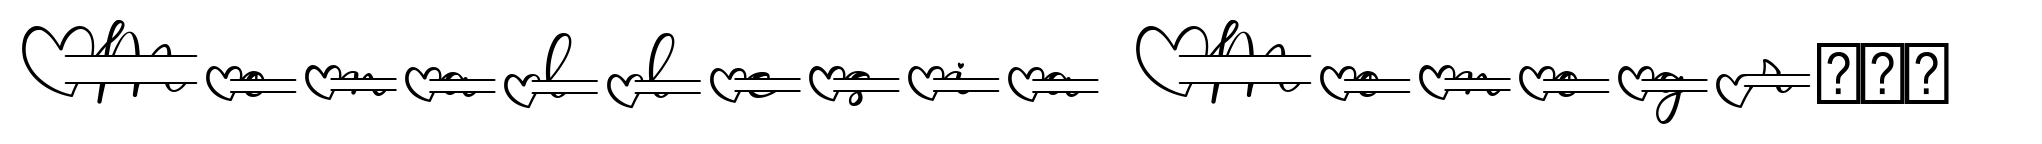 Monallesia Monogram Regular image